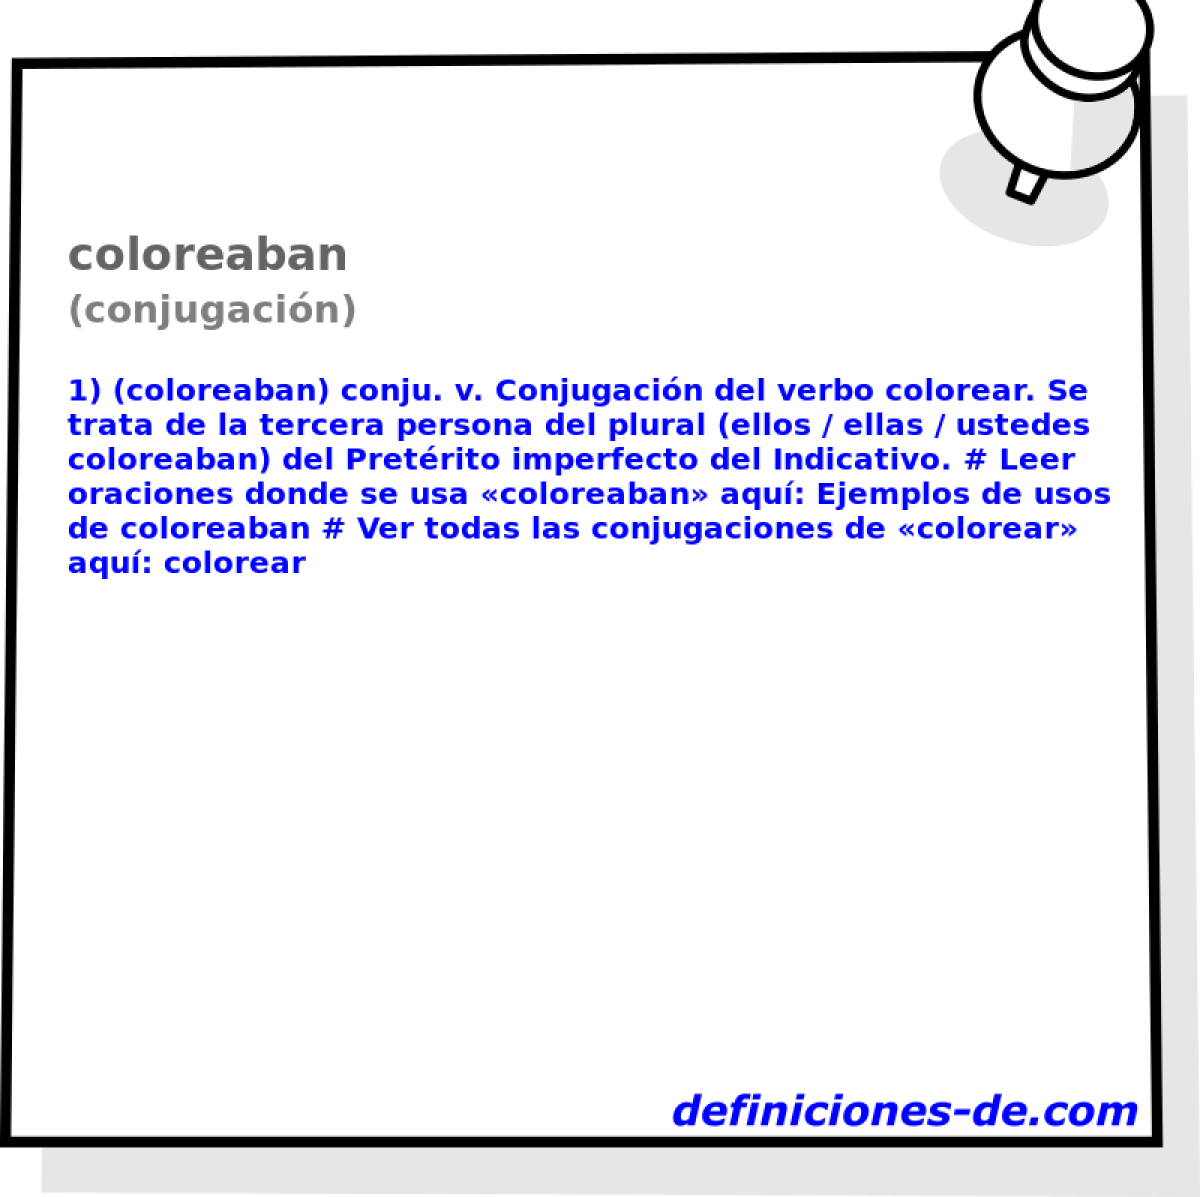 coloreaban (conjugacin)